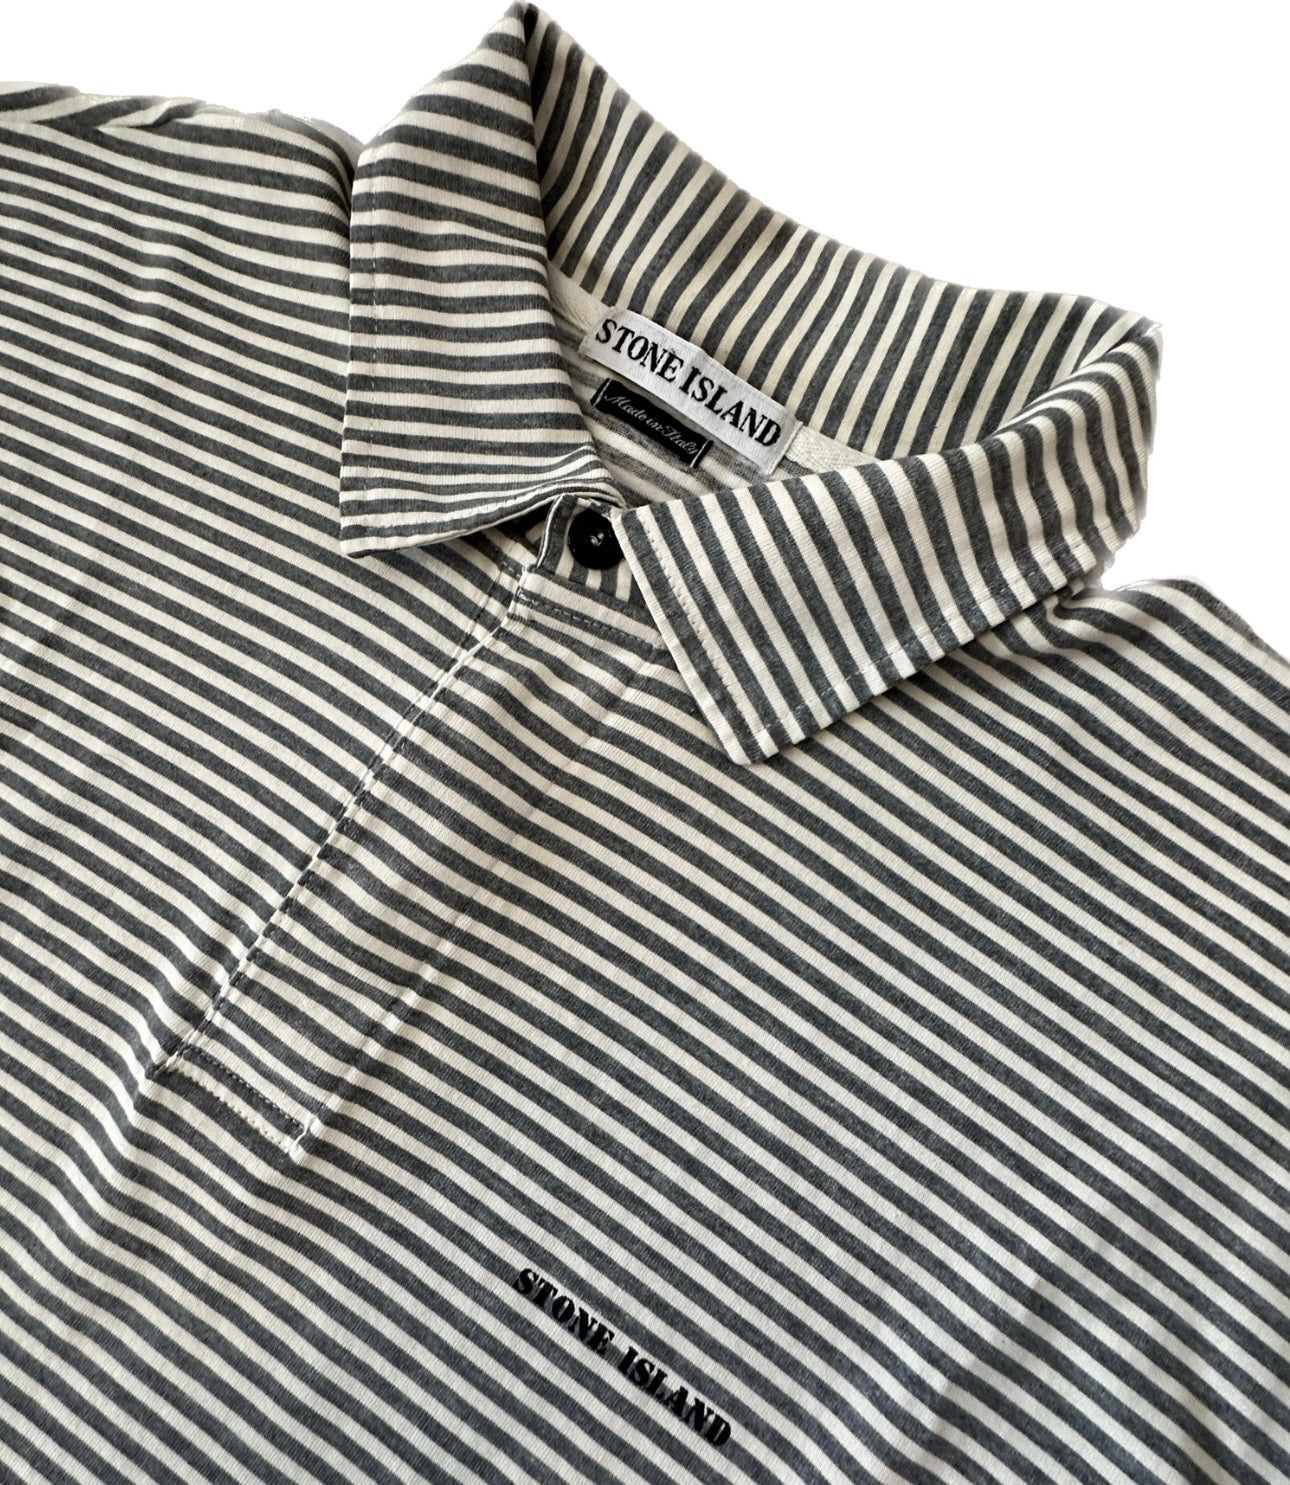 Stone Island Vintage Stripe Polo Shirt 1997 - XXL - Made in Italy